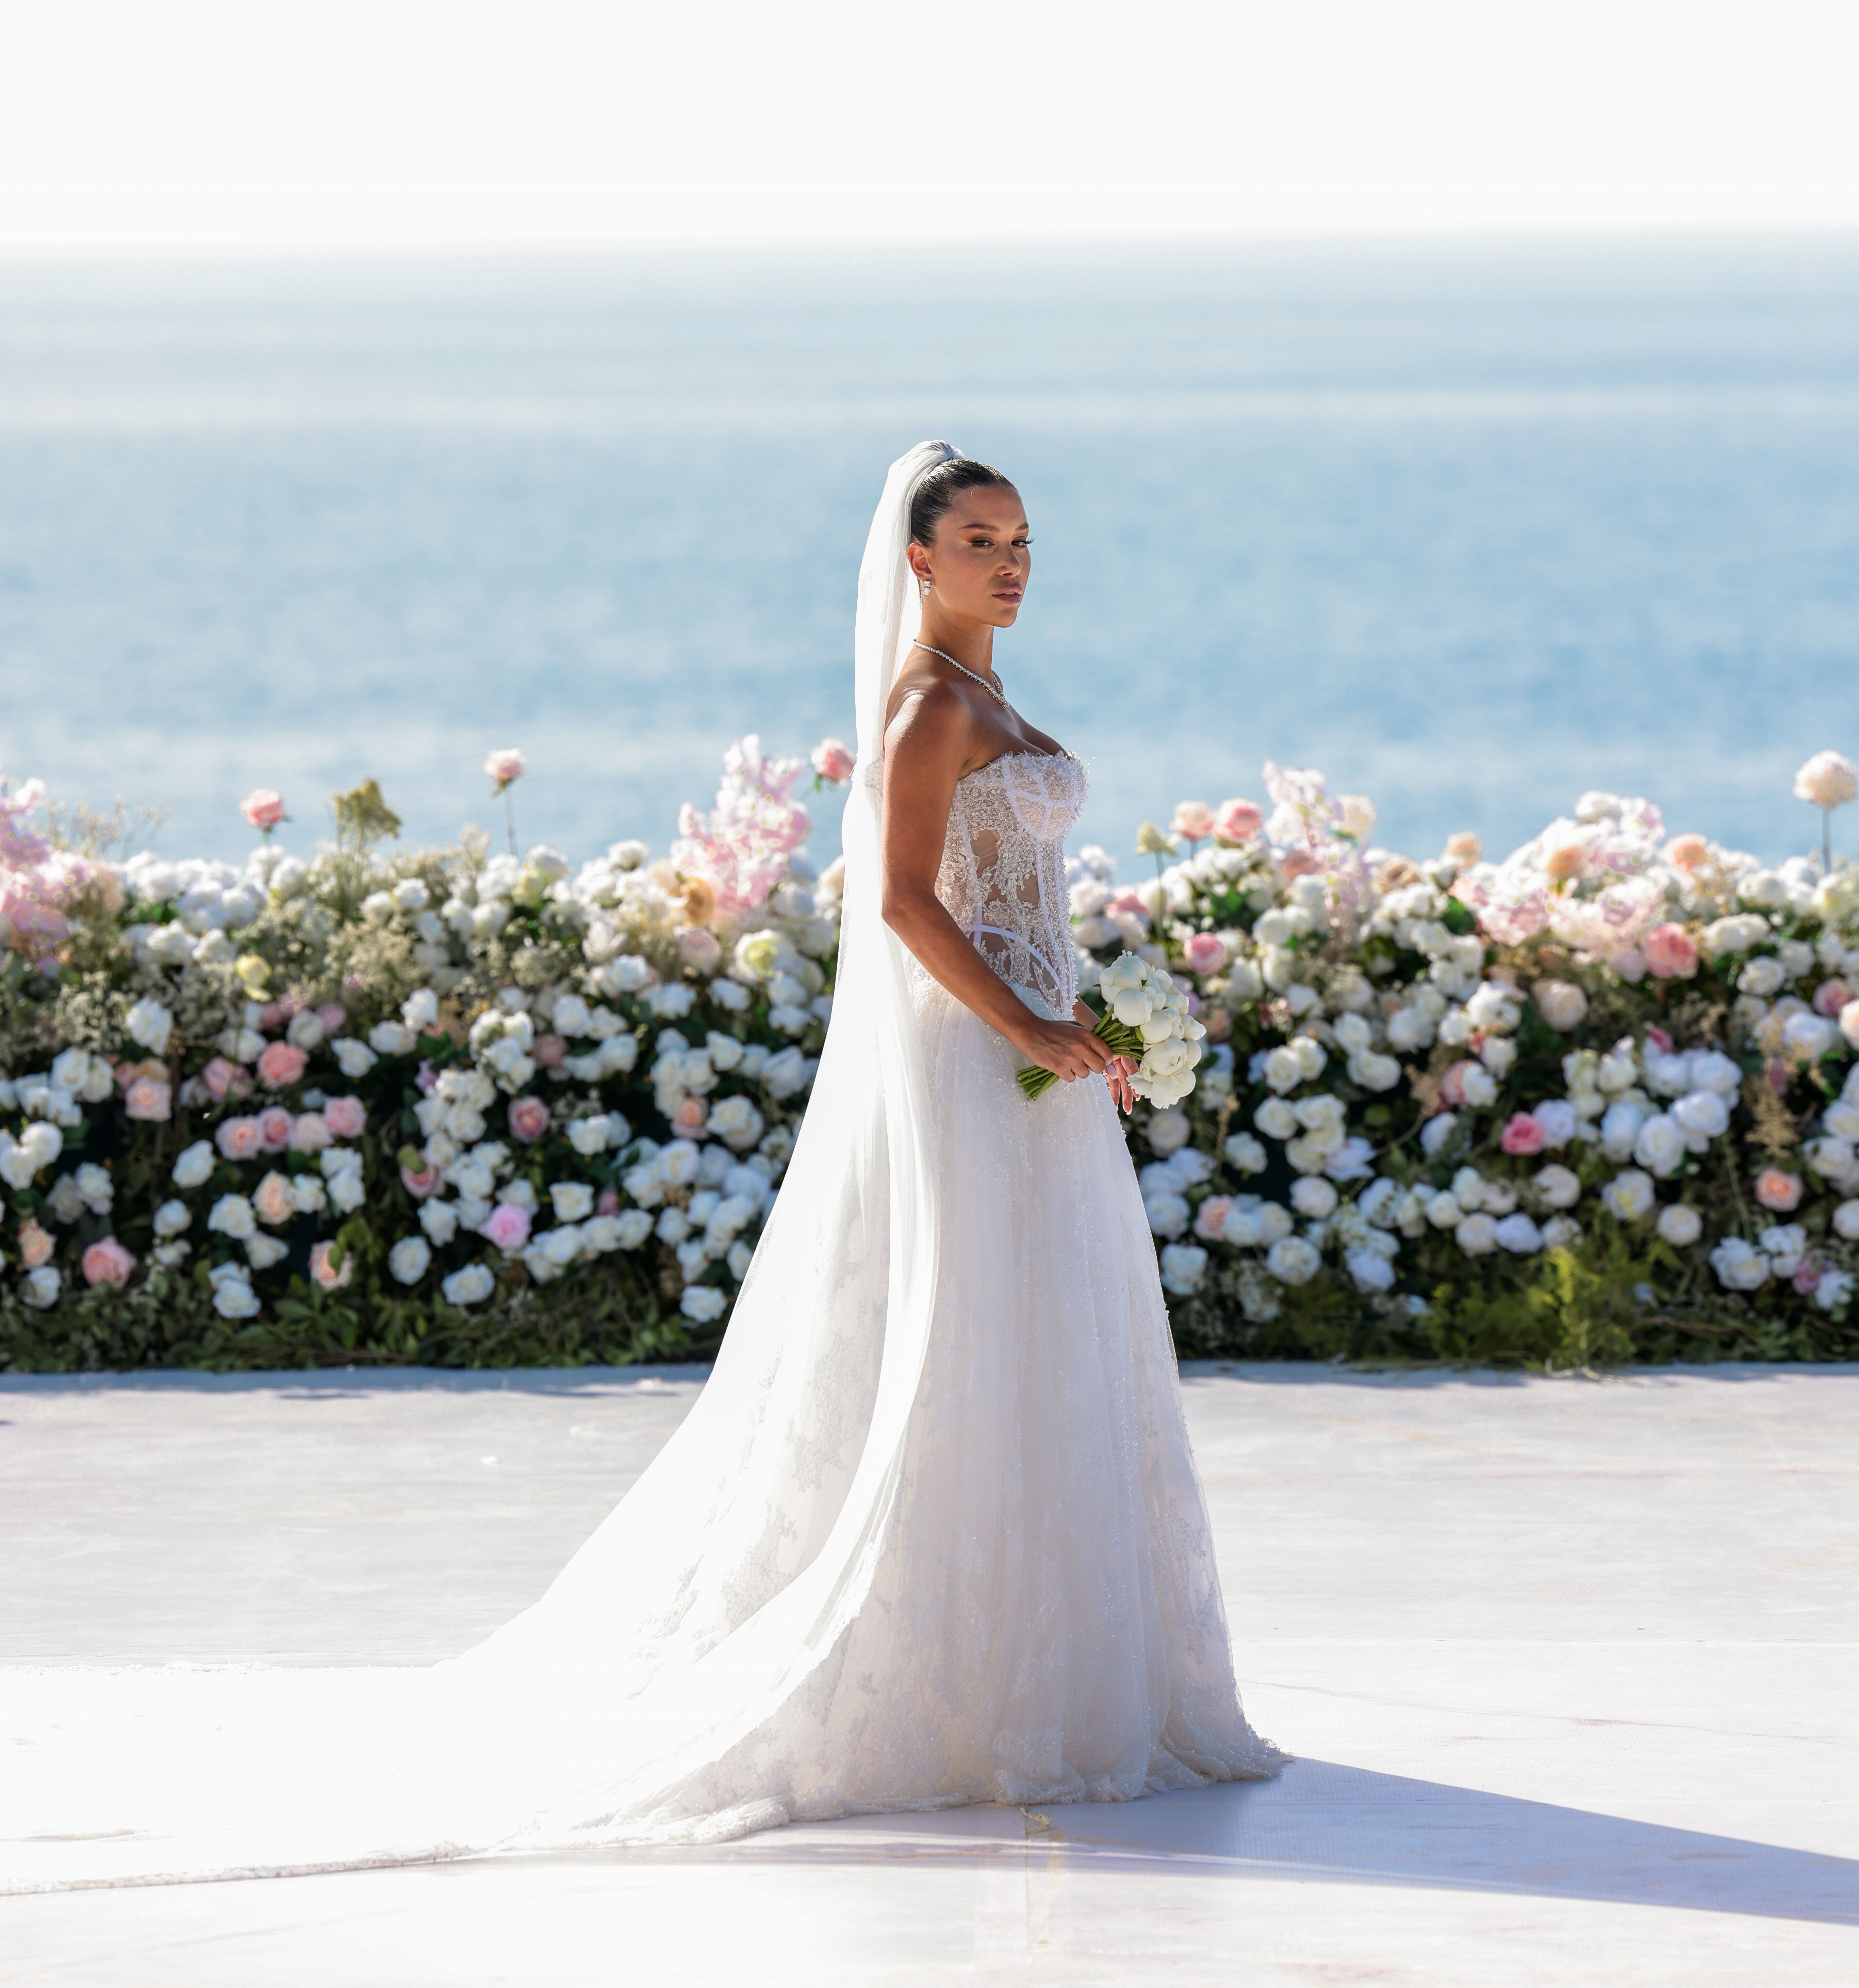 An Extravagant Seaside Palace Wedding in Lebanon